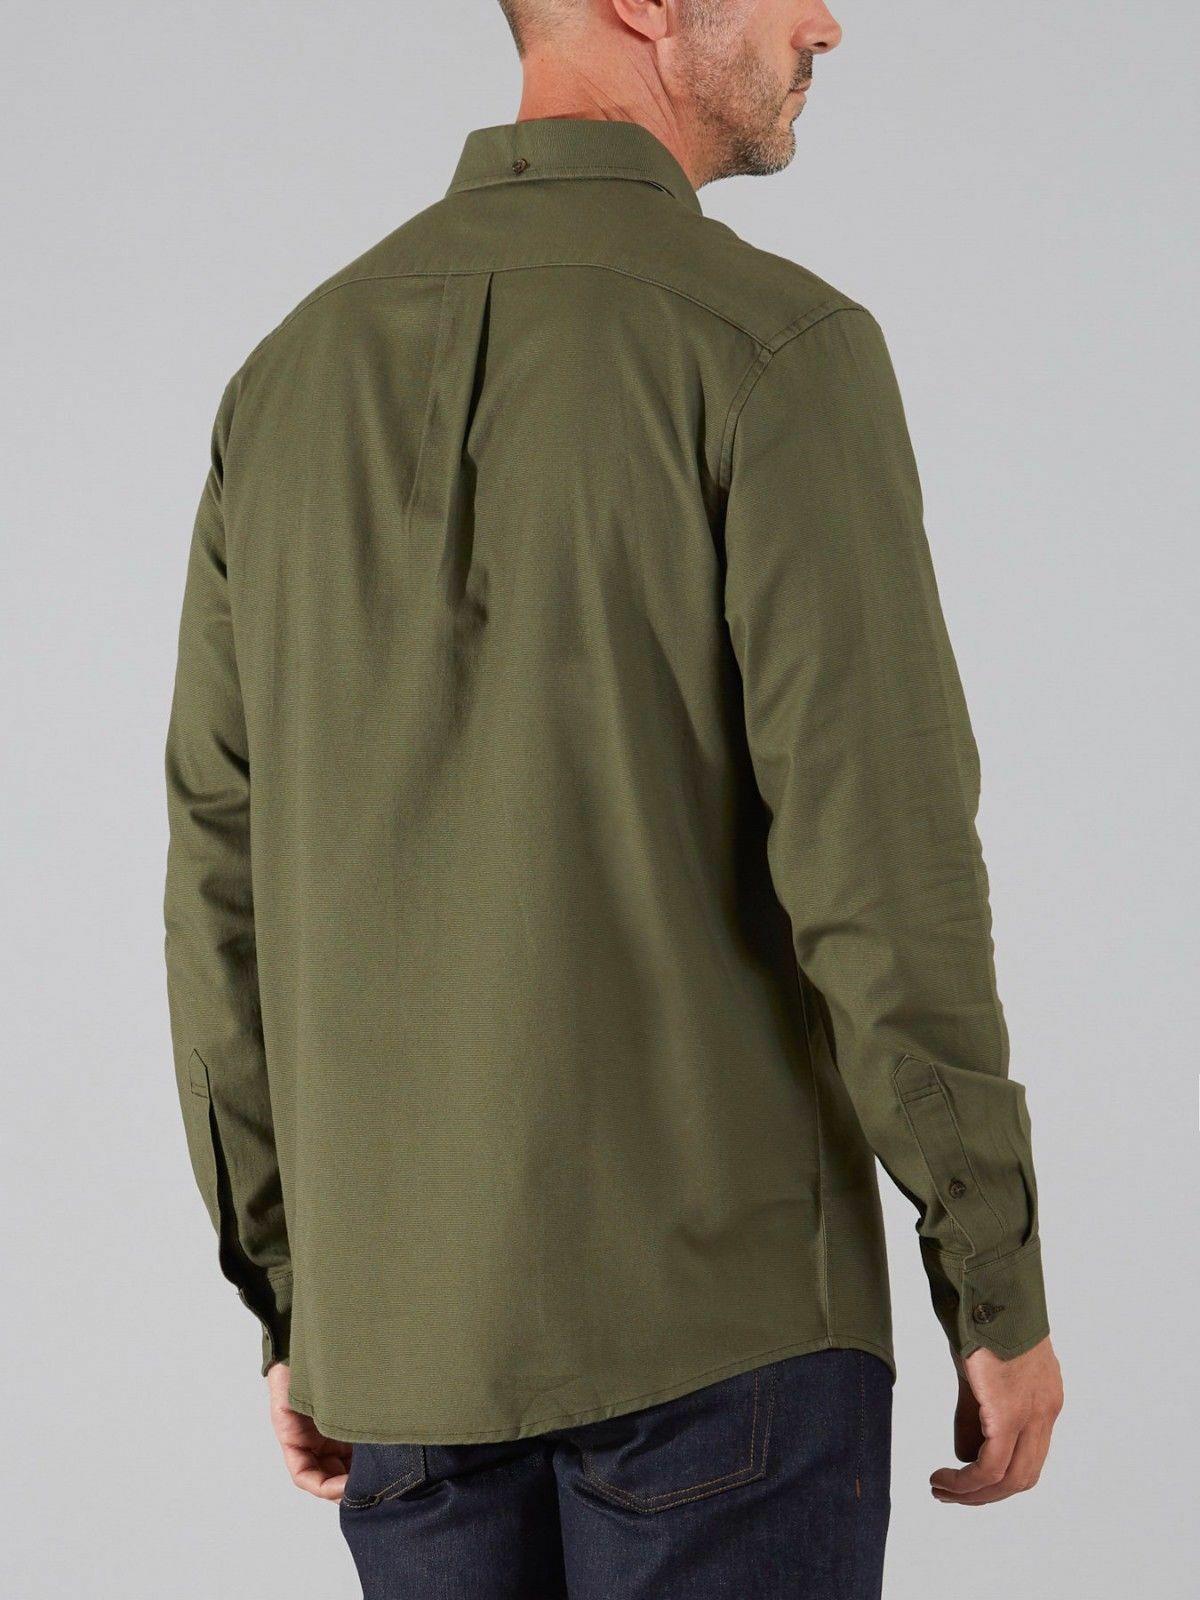 Farah THOMPSON khaki oxford long-sleeve button-down shirt size small